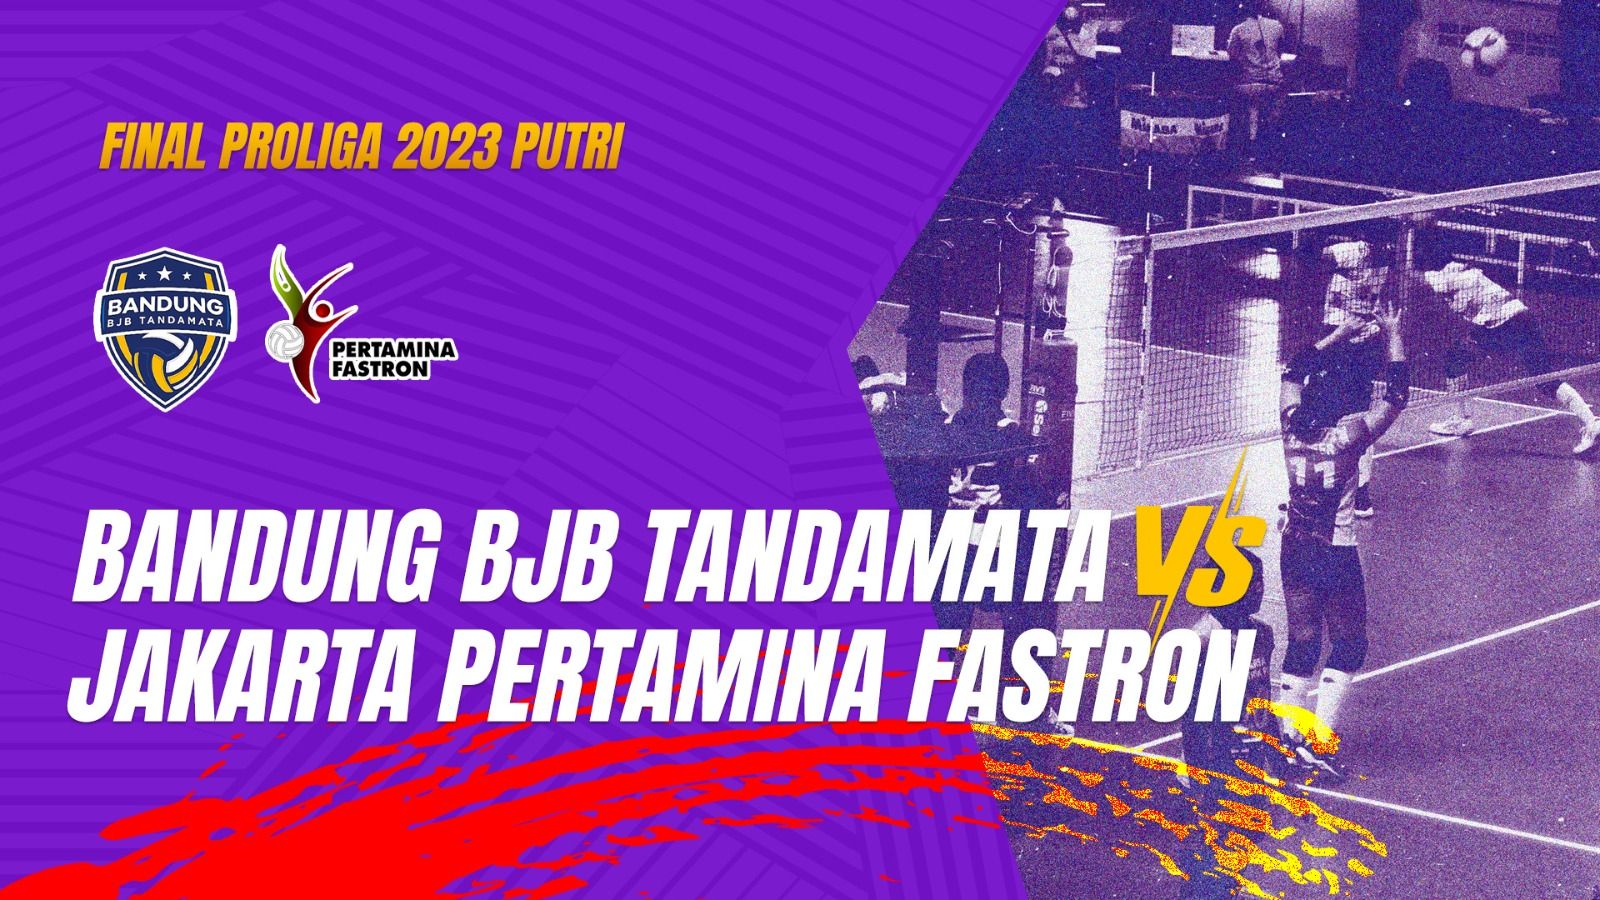 Road to Final Proliga 2023: Bandung BJB Tandamata Vs Jakarta Pertamina Fastron